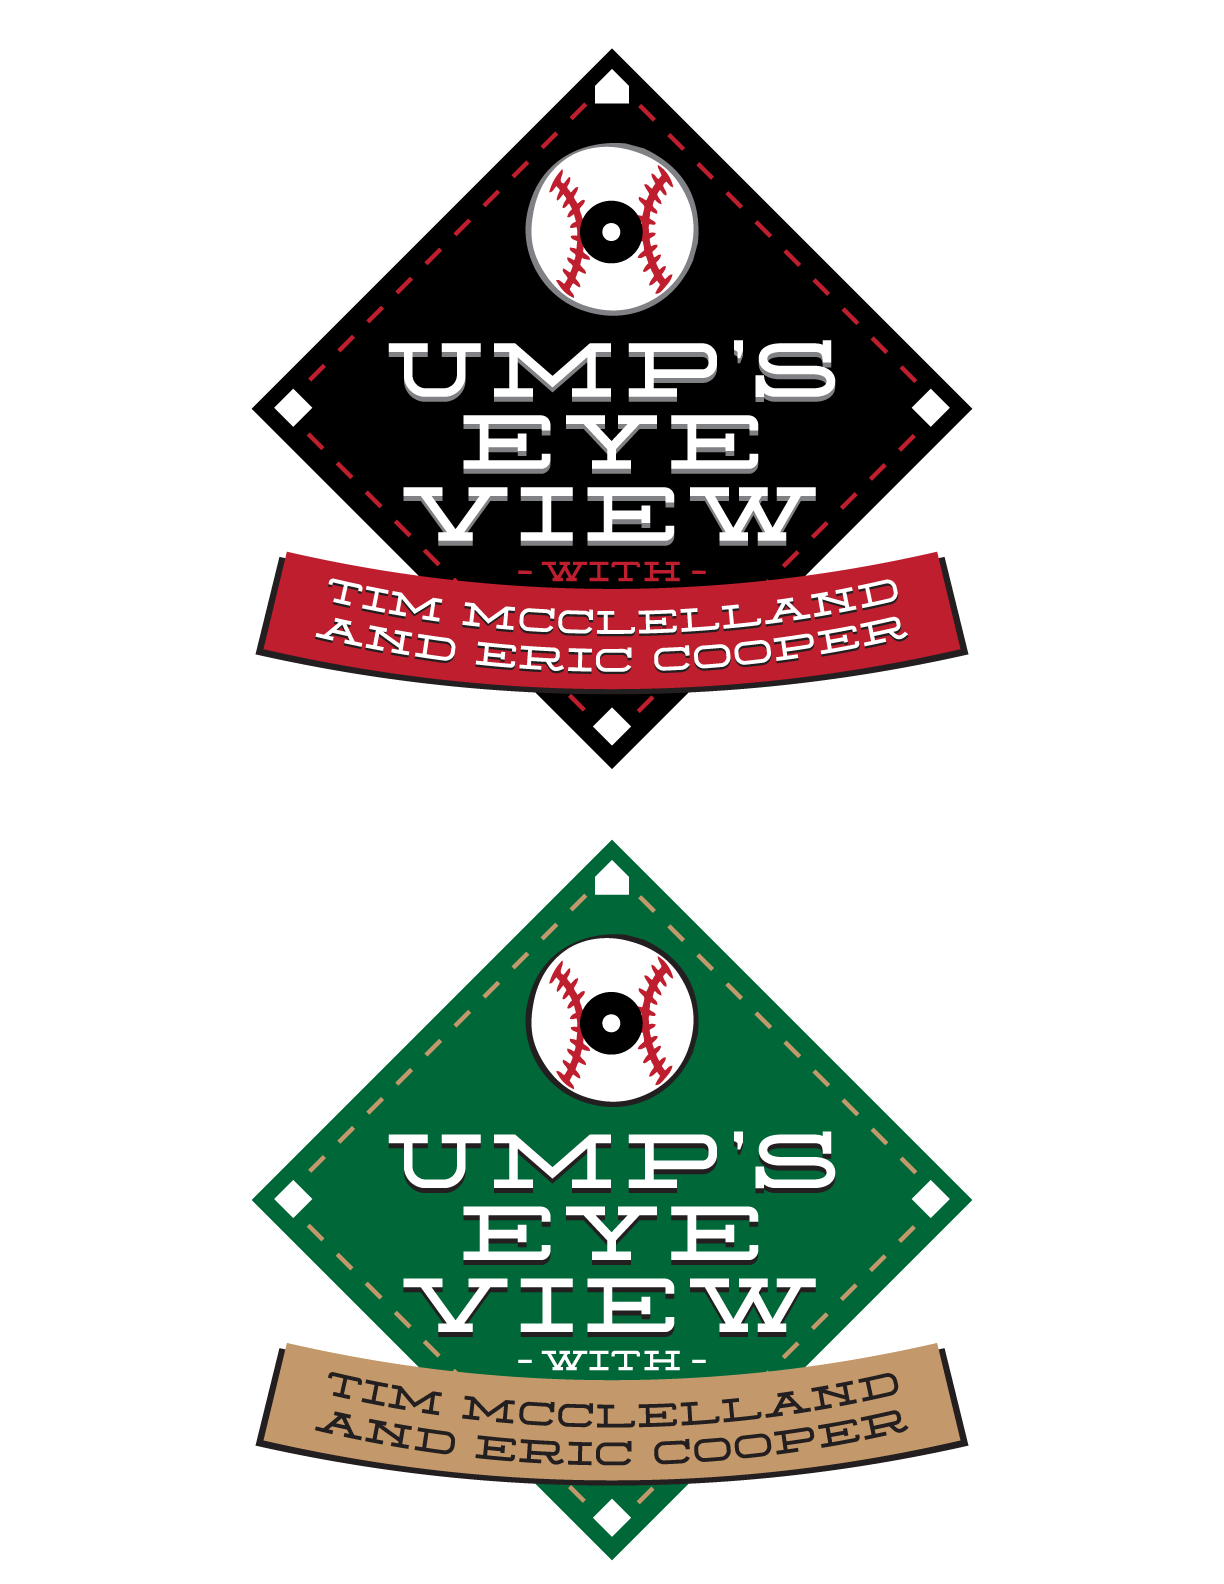 Ump's Eye View logo for a radio show at Rockstar Satellite